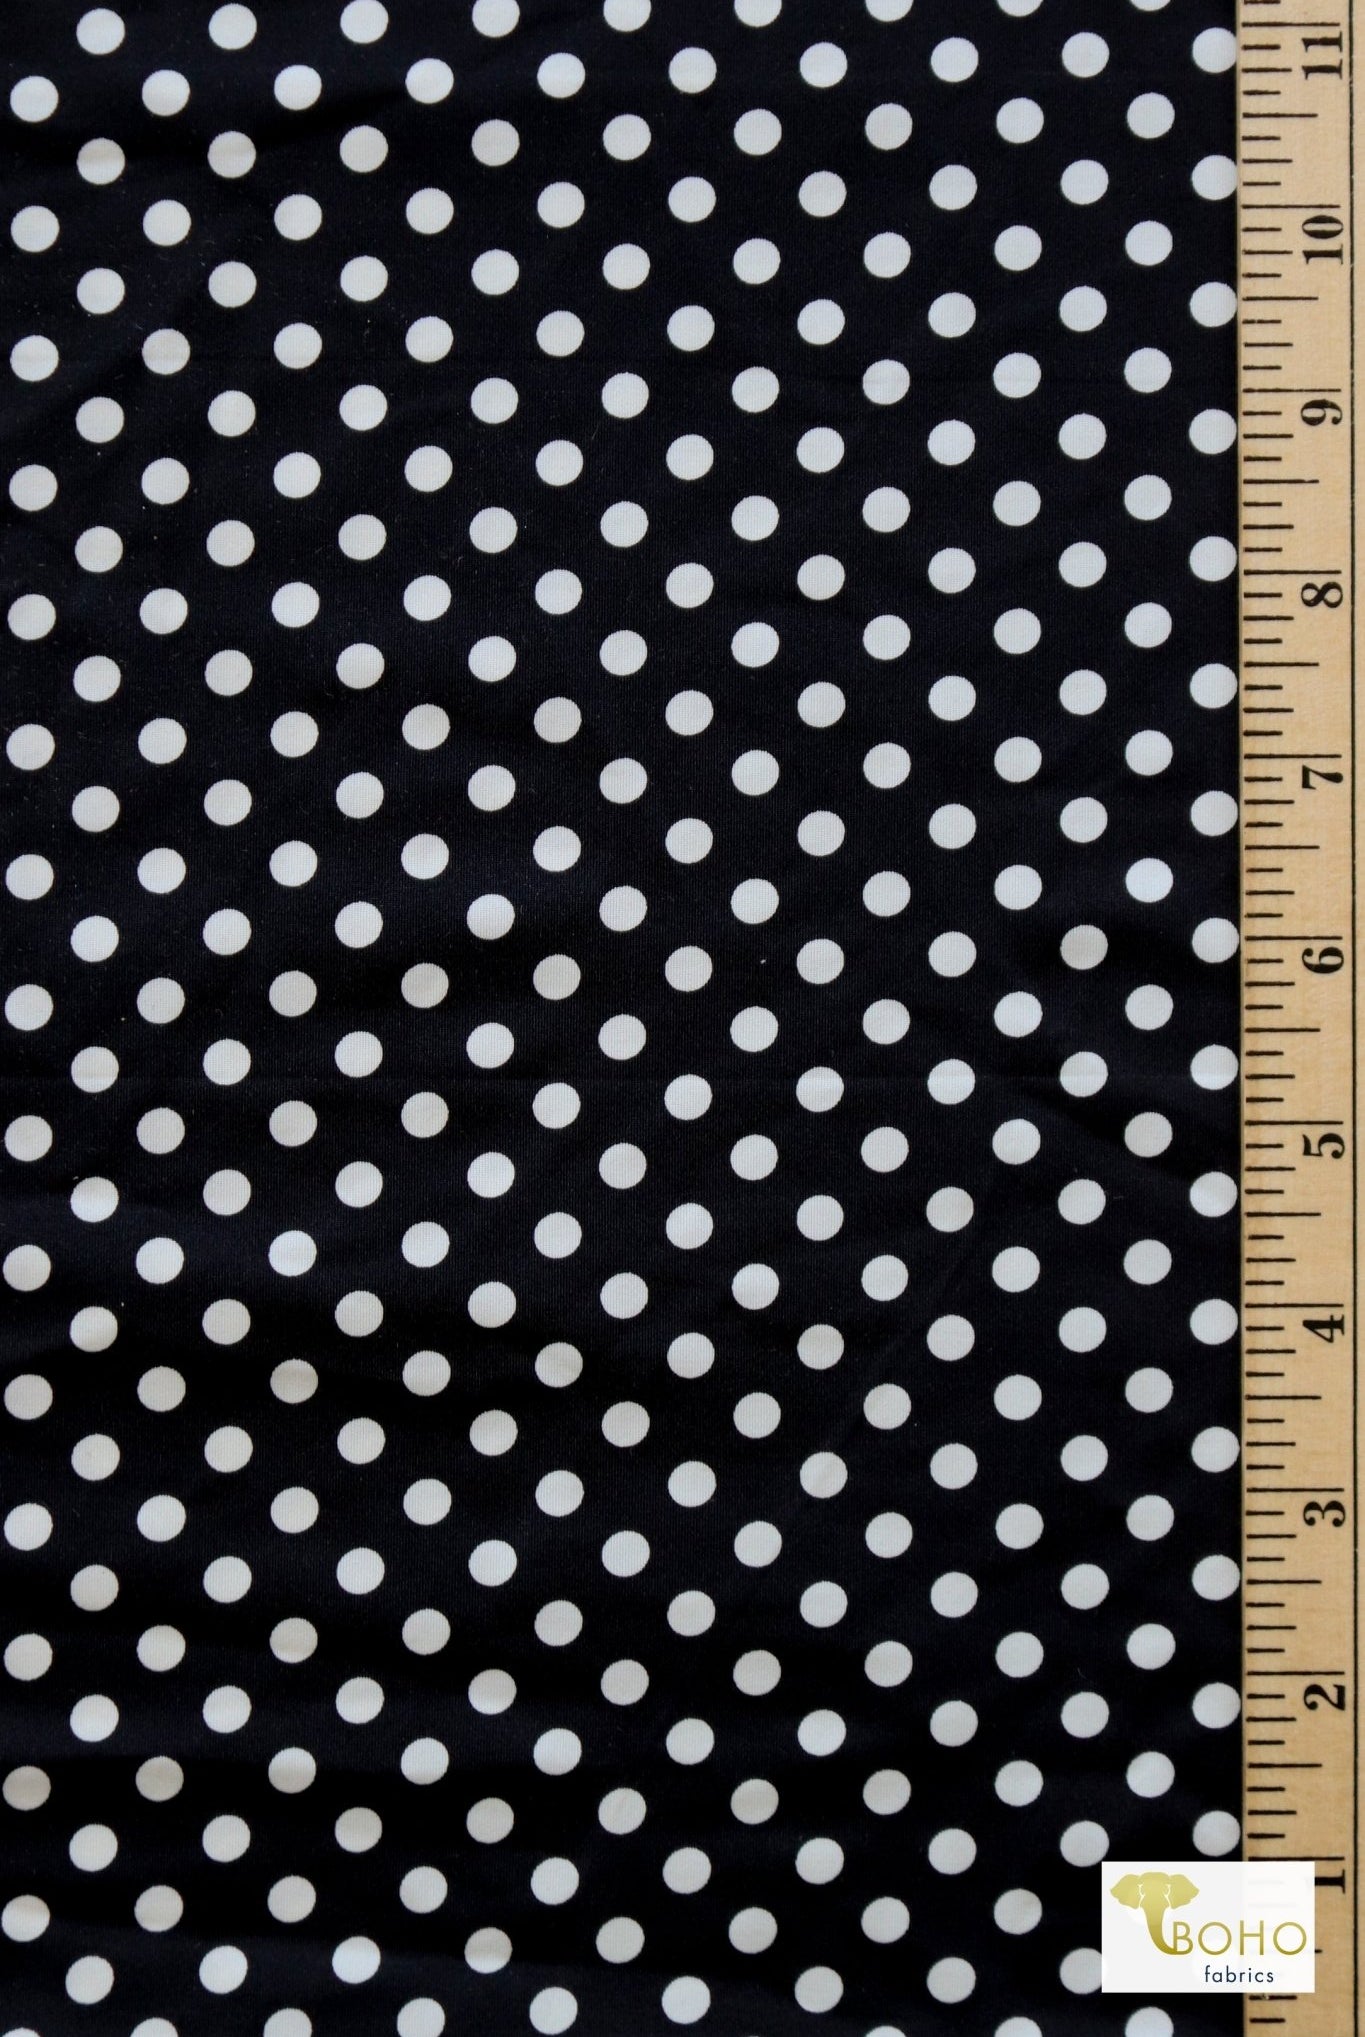 Black and Ivory Polka Dots, Printed Swim Knit Fabric. 32" Panel - Boho Fabrics